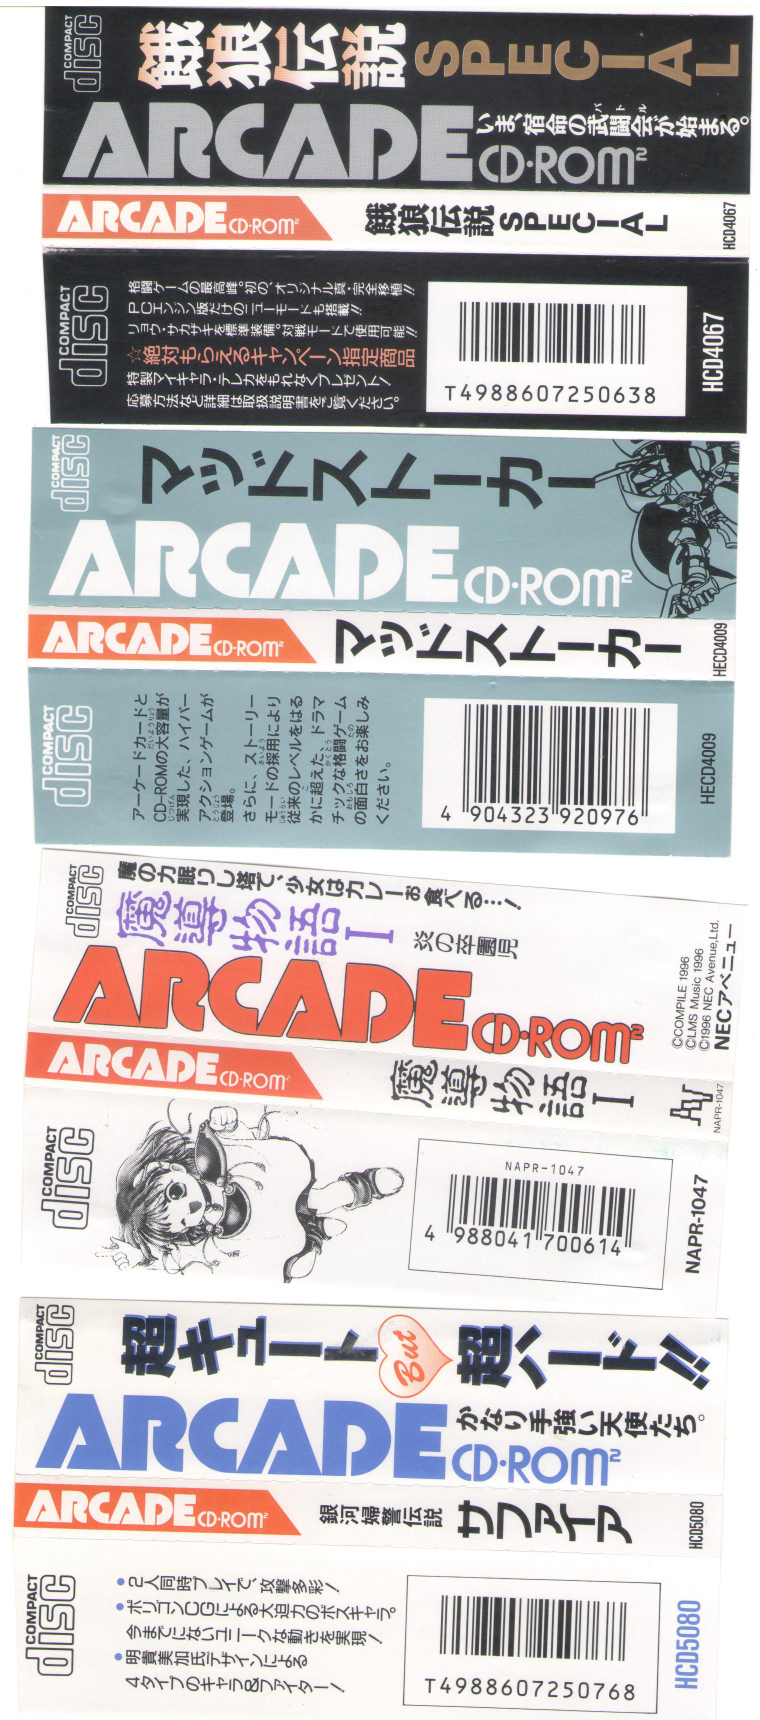 0_1516821311184_arcade-spinecards.jpg